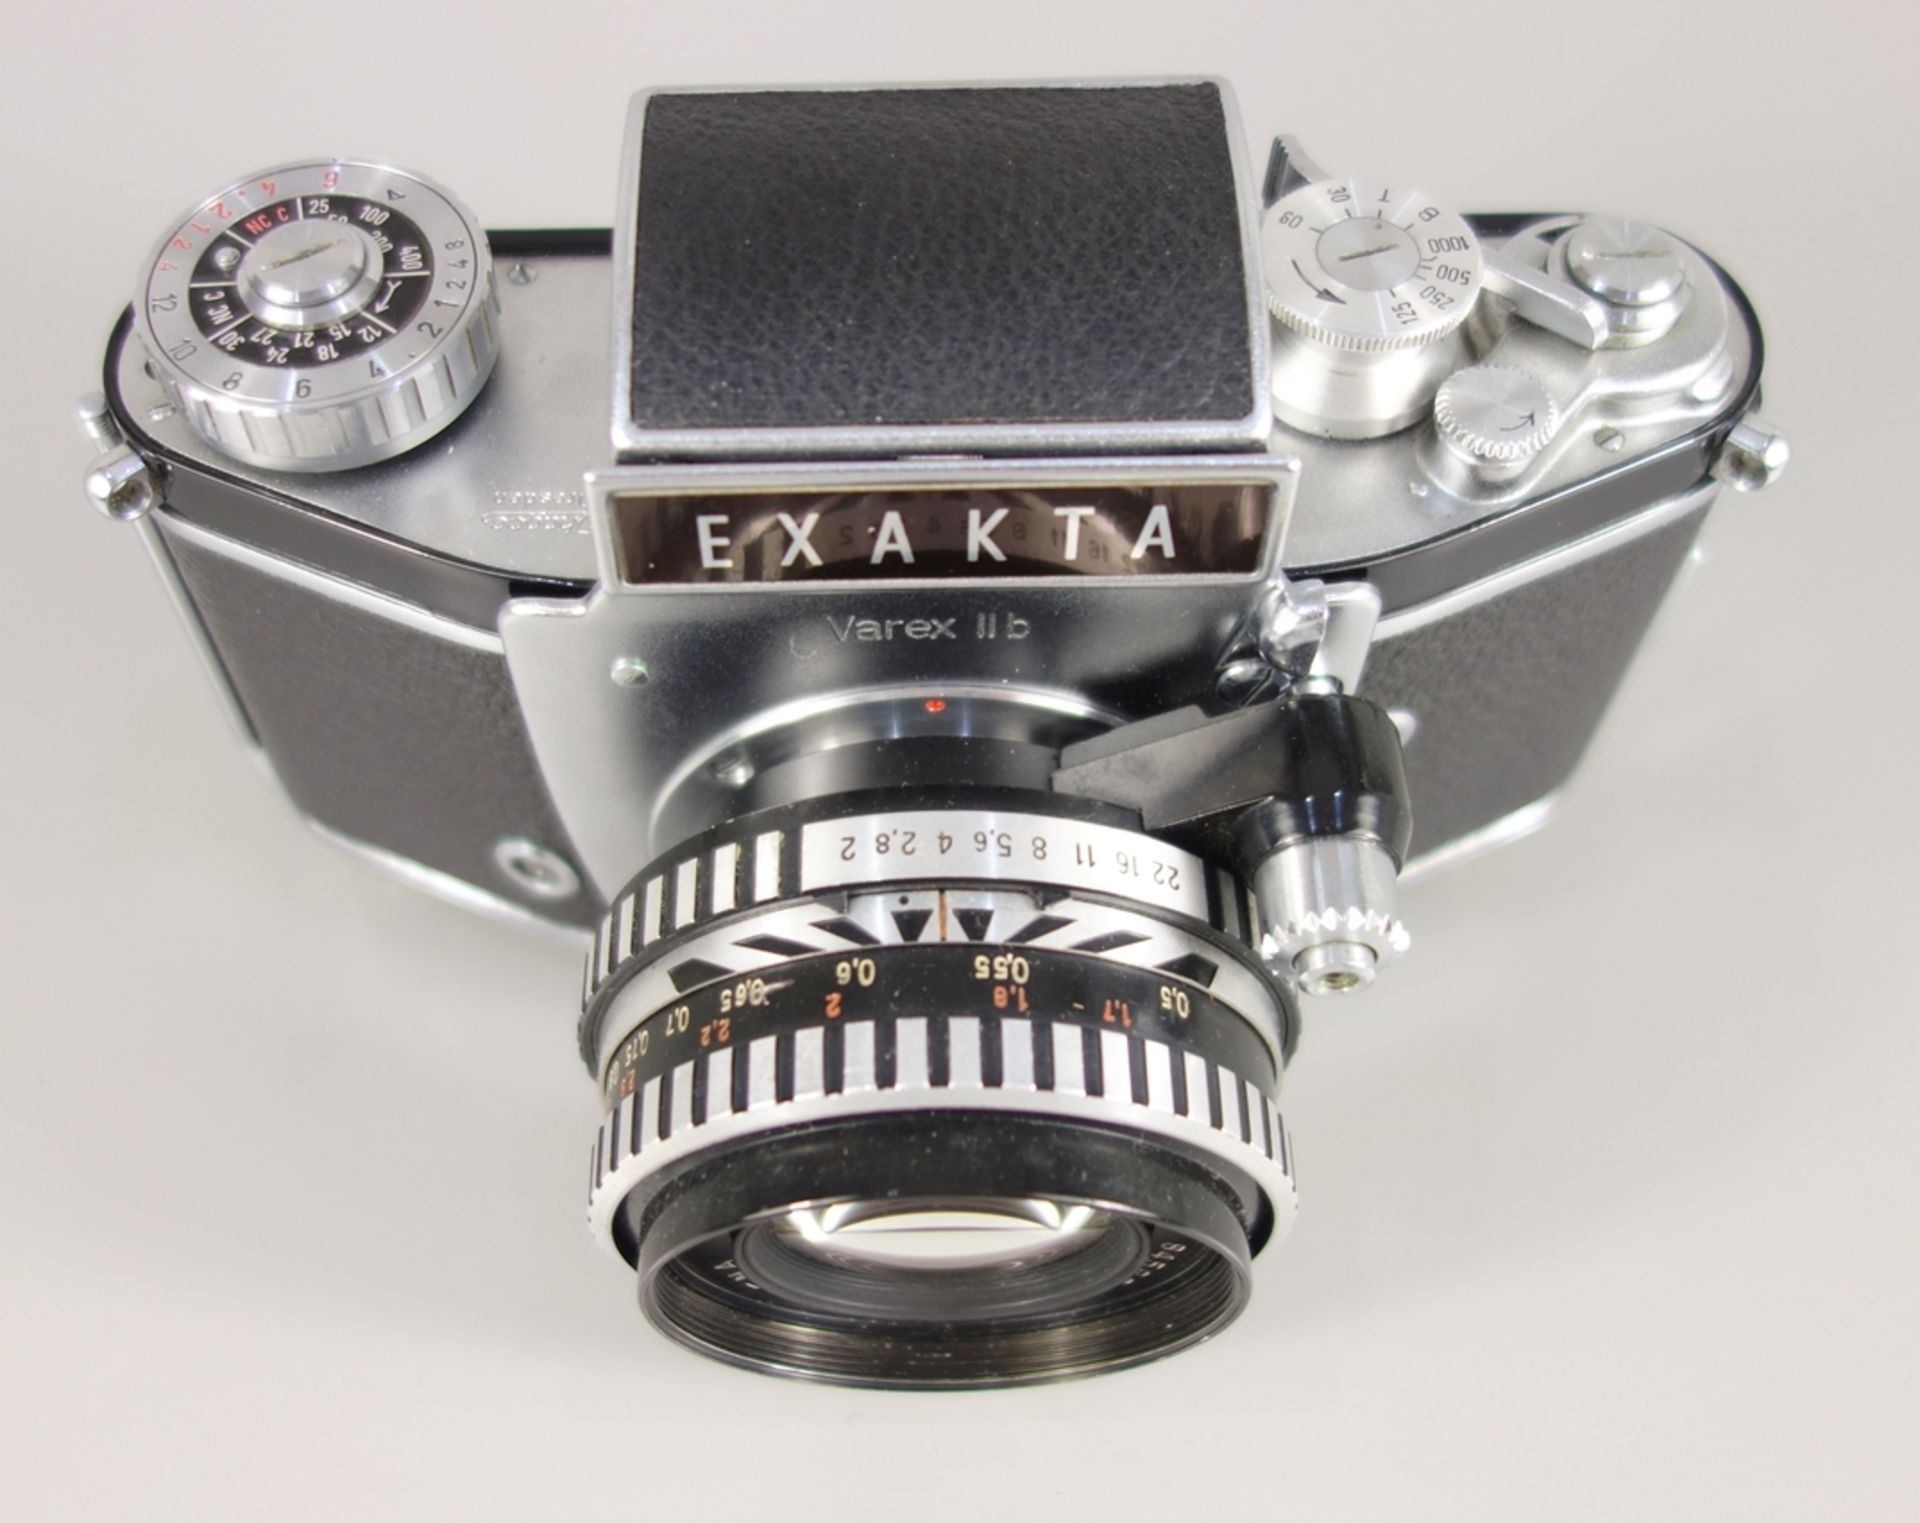 Exakta Varex IIb, Ihagee Dresden, 1963-1967, Kleinbildspiegelreflexkamera, Serien-Nr. 1113304, mit - Image 2 of 5